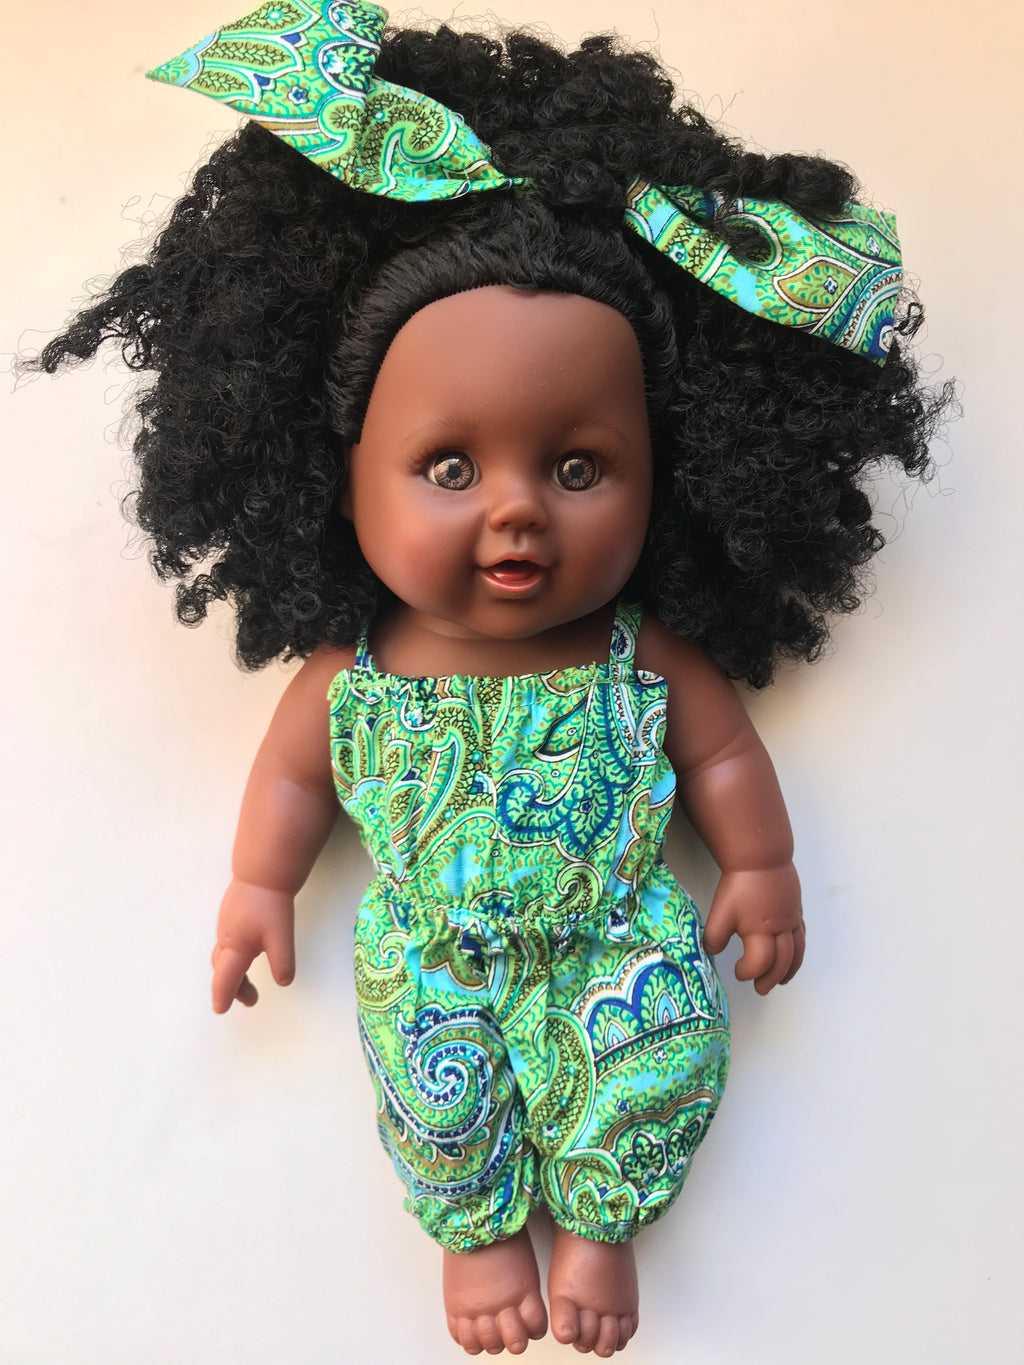 Baby Imani Green Onesie - UrbanToons Inc.